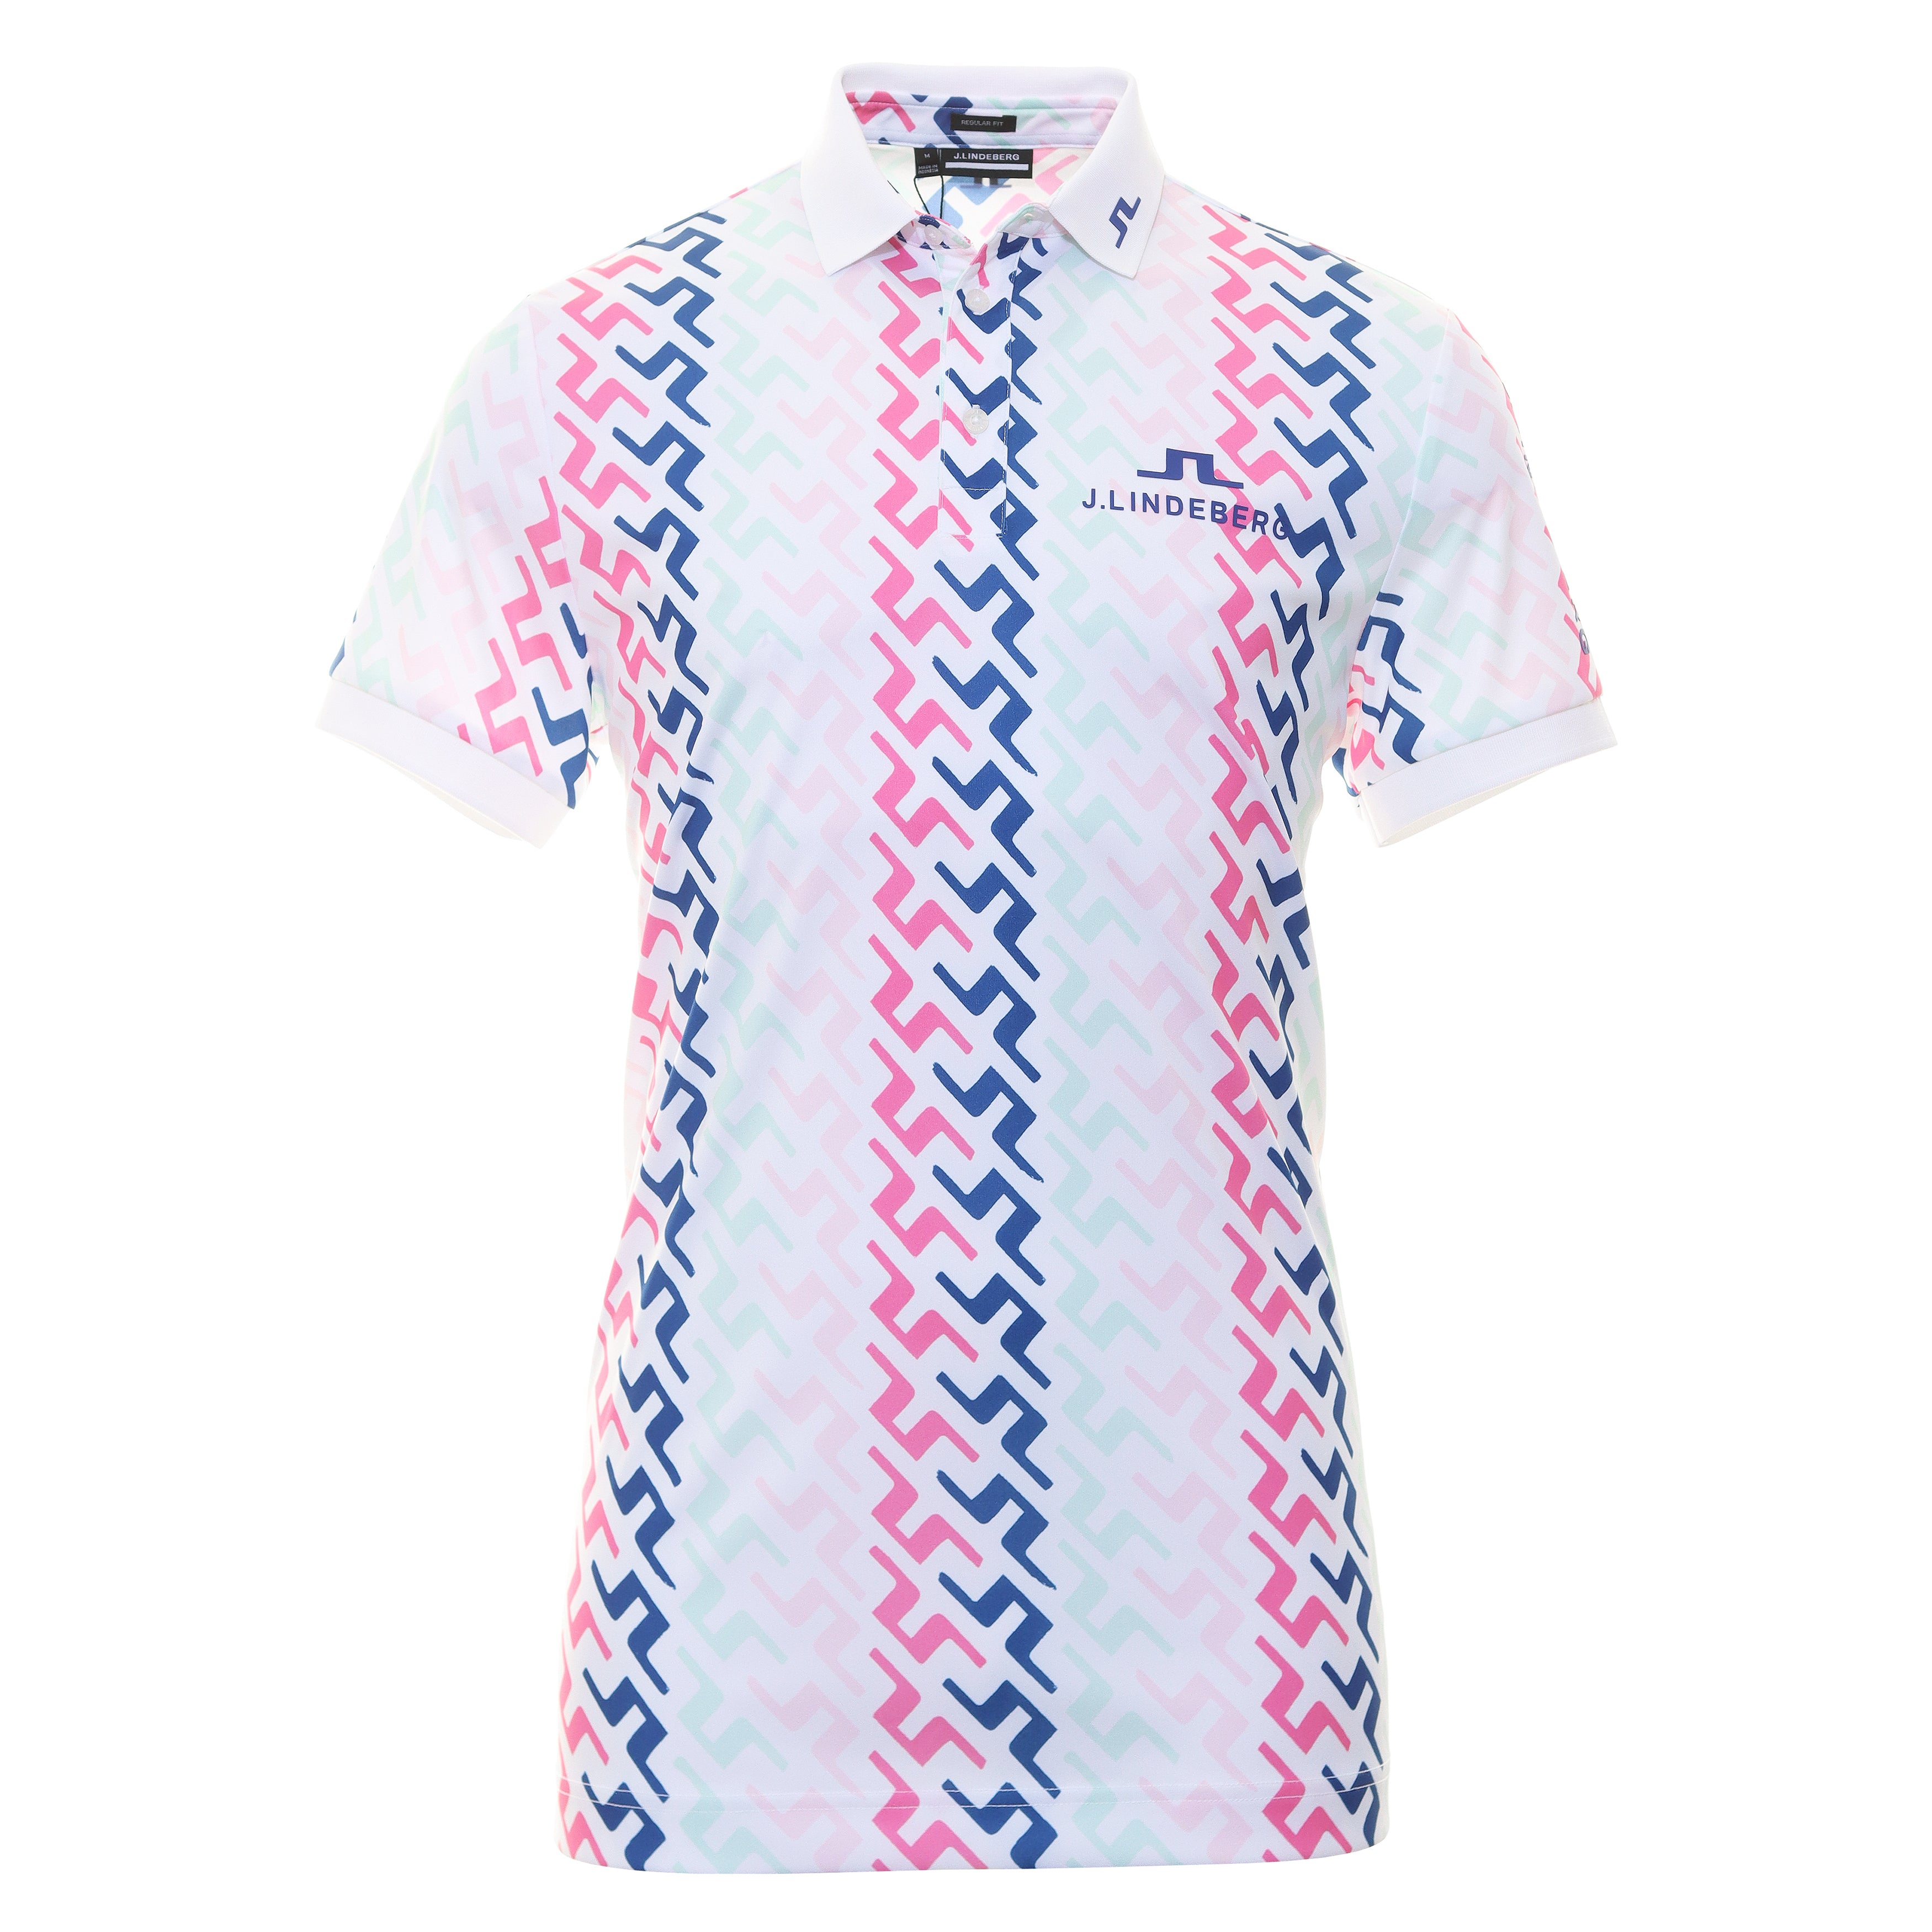 J.Lindeberg Golf Tour Tech Print Polo Shirt GMJT10183 Pink Painted ...